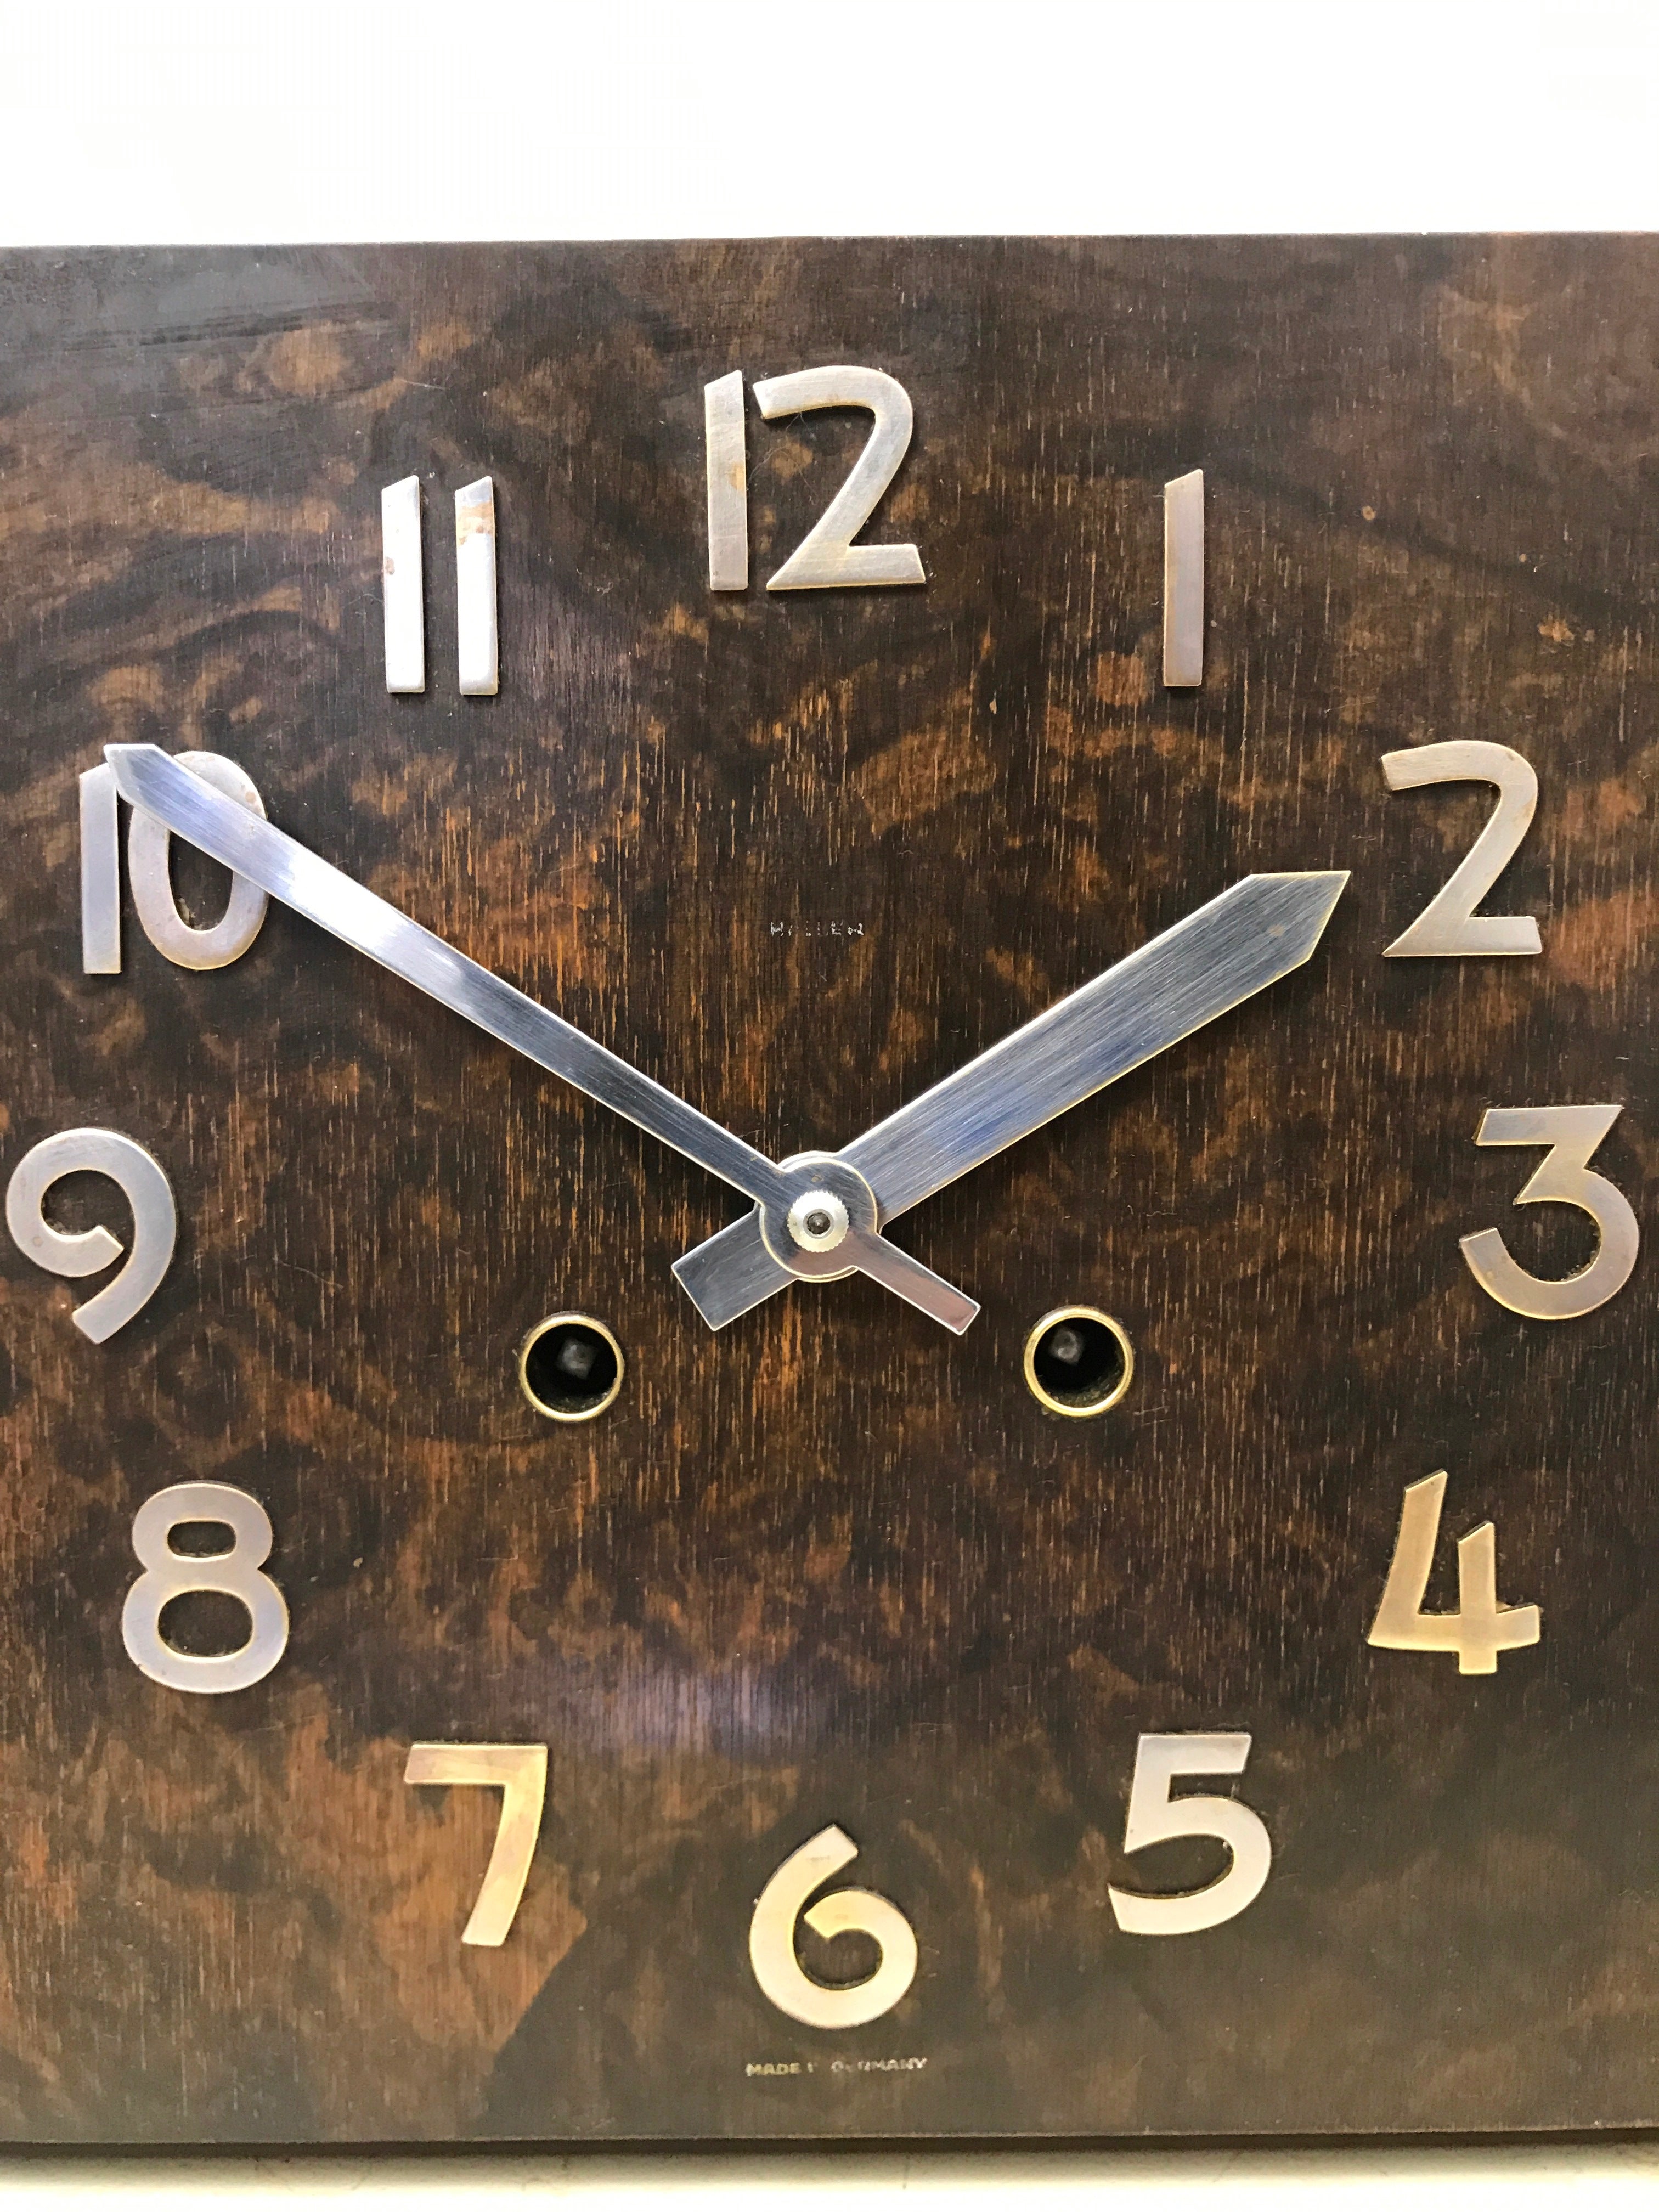 Vintage HALLER Art Deco German Mantel Clock | eXibit collection